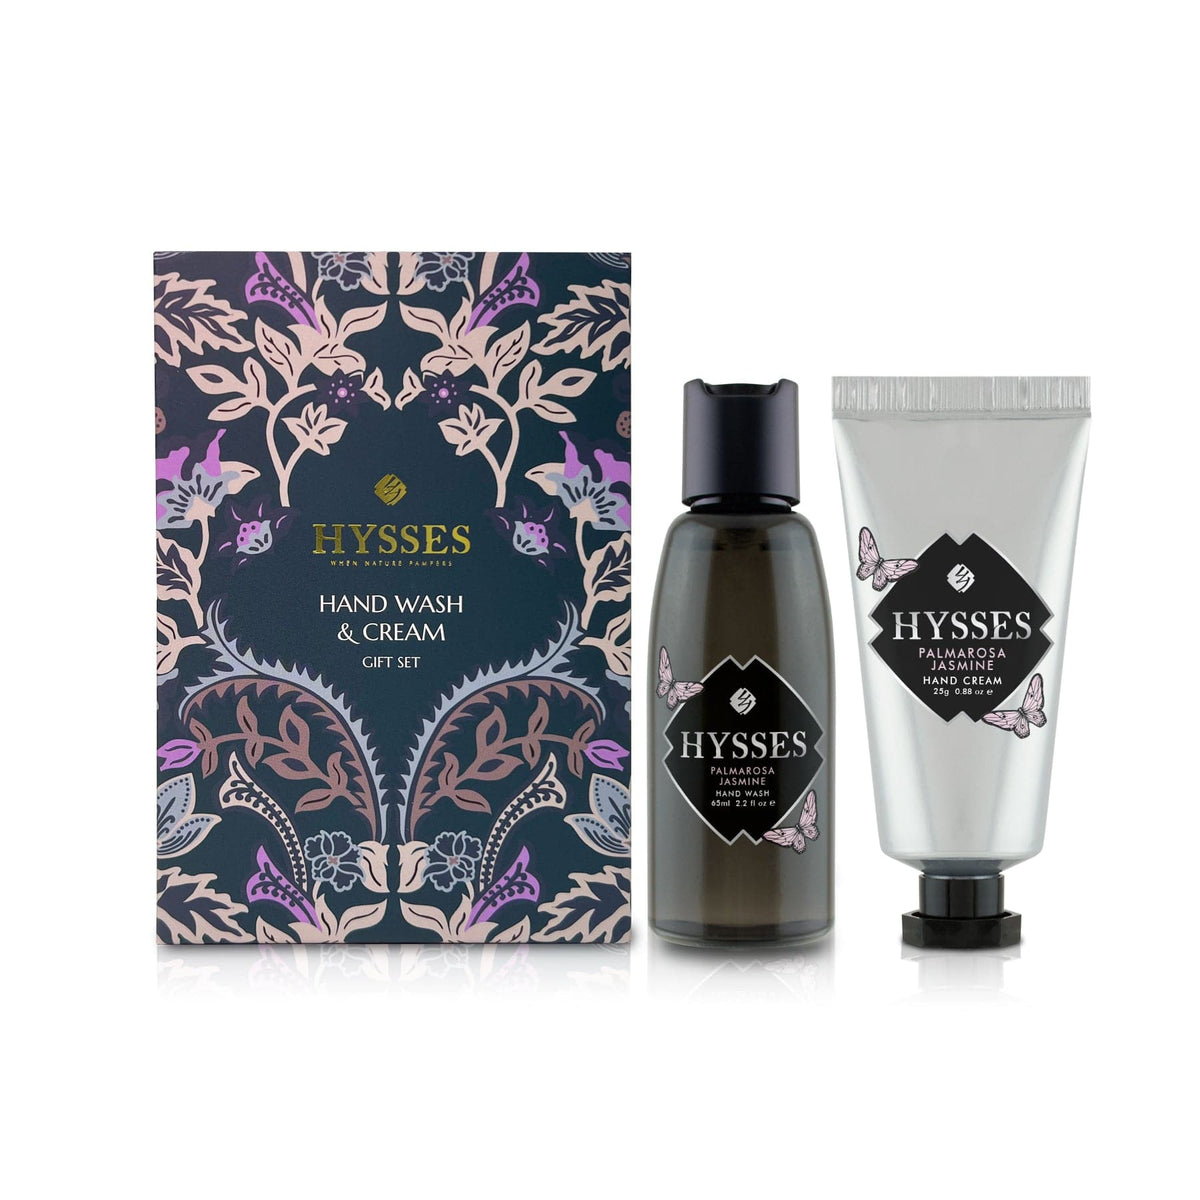 Hysses Body Care Palmarosa Jasmine Travel Gift Set (Hand Wash &amp; Hand Cream)